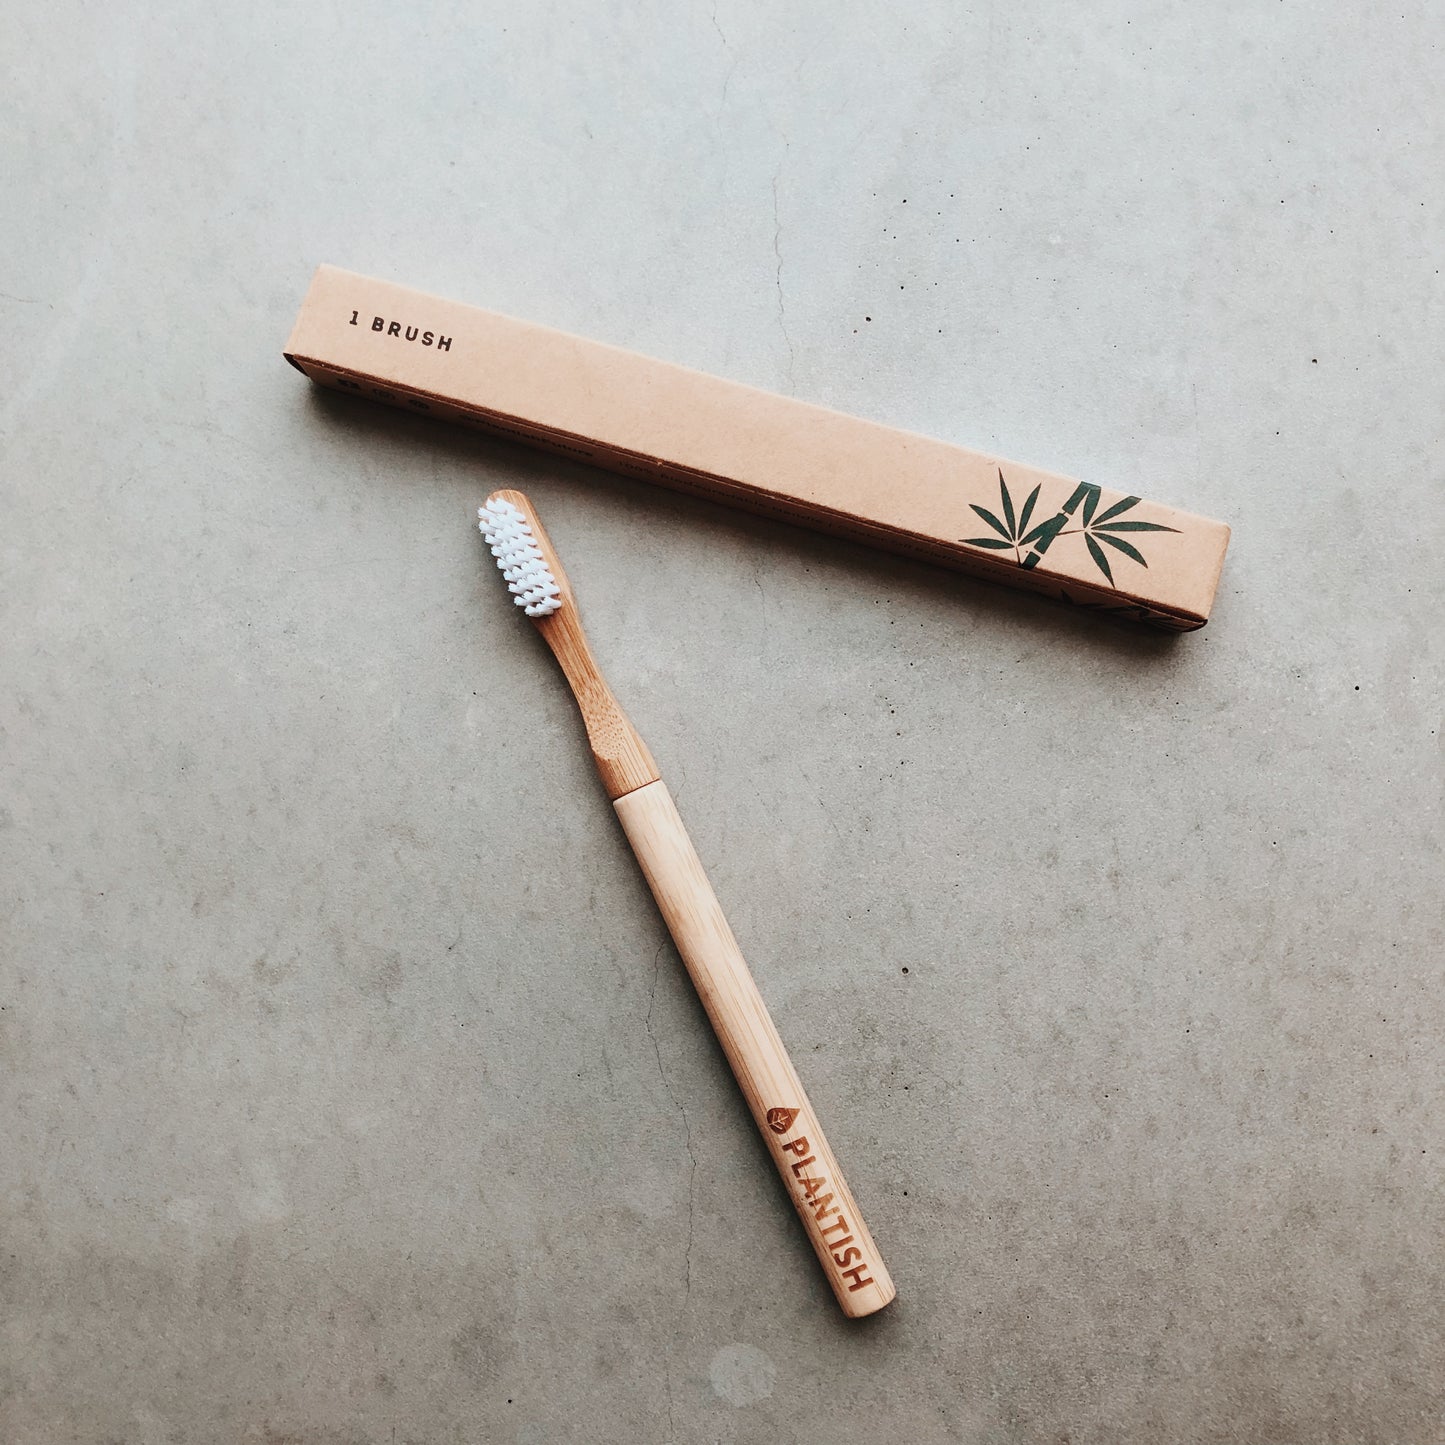 Refillable Bamboo Toothbrush - 1 brush